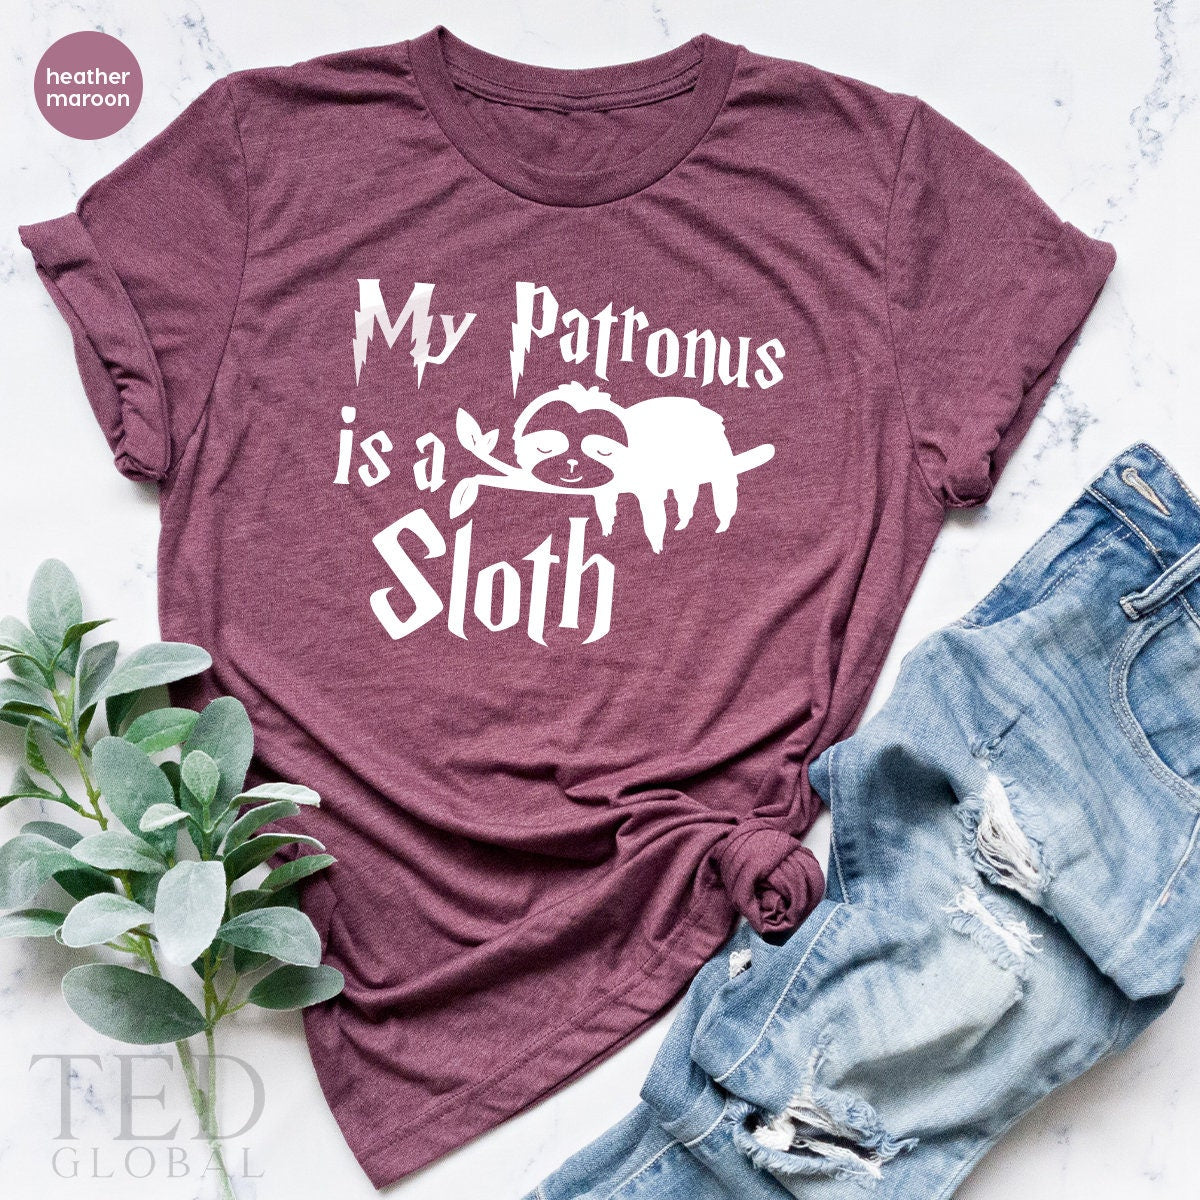 Funny Sloth Tshirt, Sloth Lover Shirt, Potter Sloth Shirt, My Patronus Is Sloth Shirt, Lazy Days T Shirt, Funny Animal Tees, Humorous Shirt - Fastdeliverytees.com